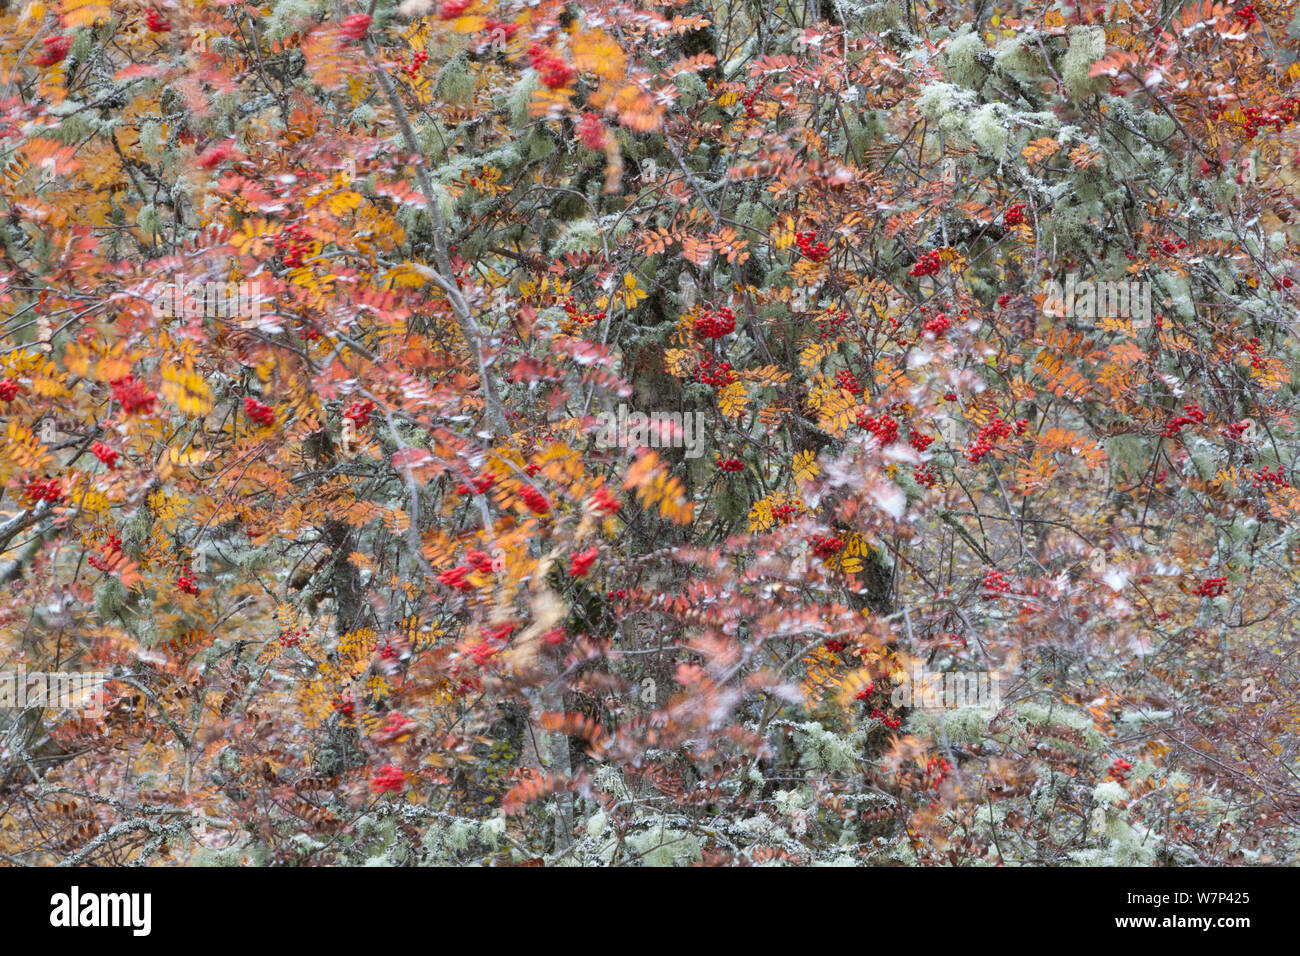 Mixed native woodland comprised of Silver birch (Betula pendula), Alder (Alnus hirsuta) and Rowan (Sorbus aucuparia) trees in autumn, Cairngorms National Park, Scotland, UK, October. Stock Photo